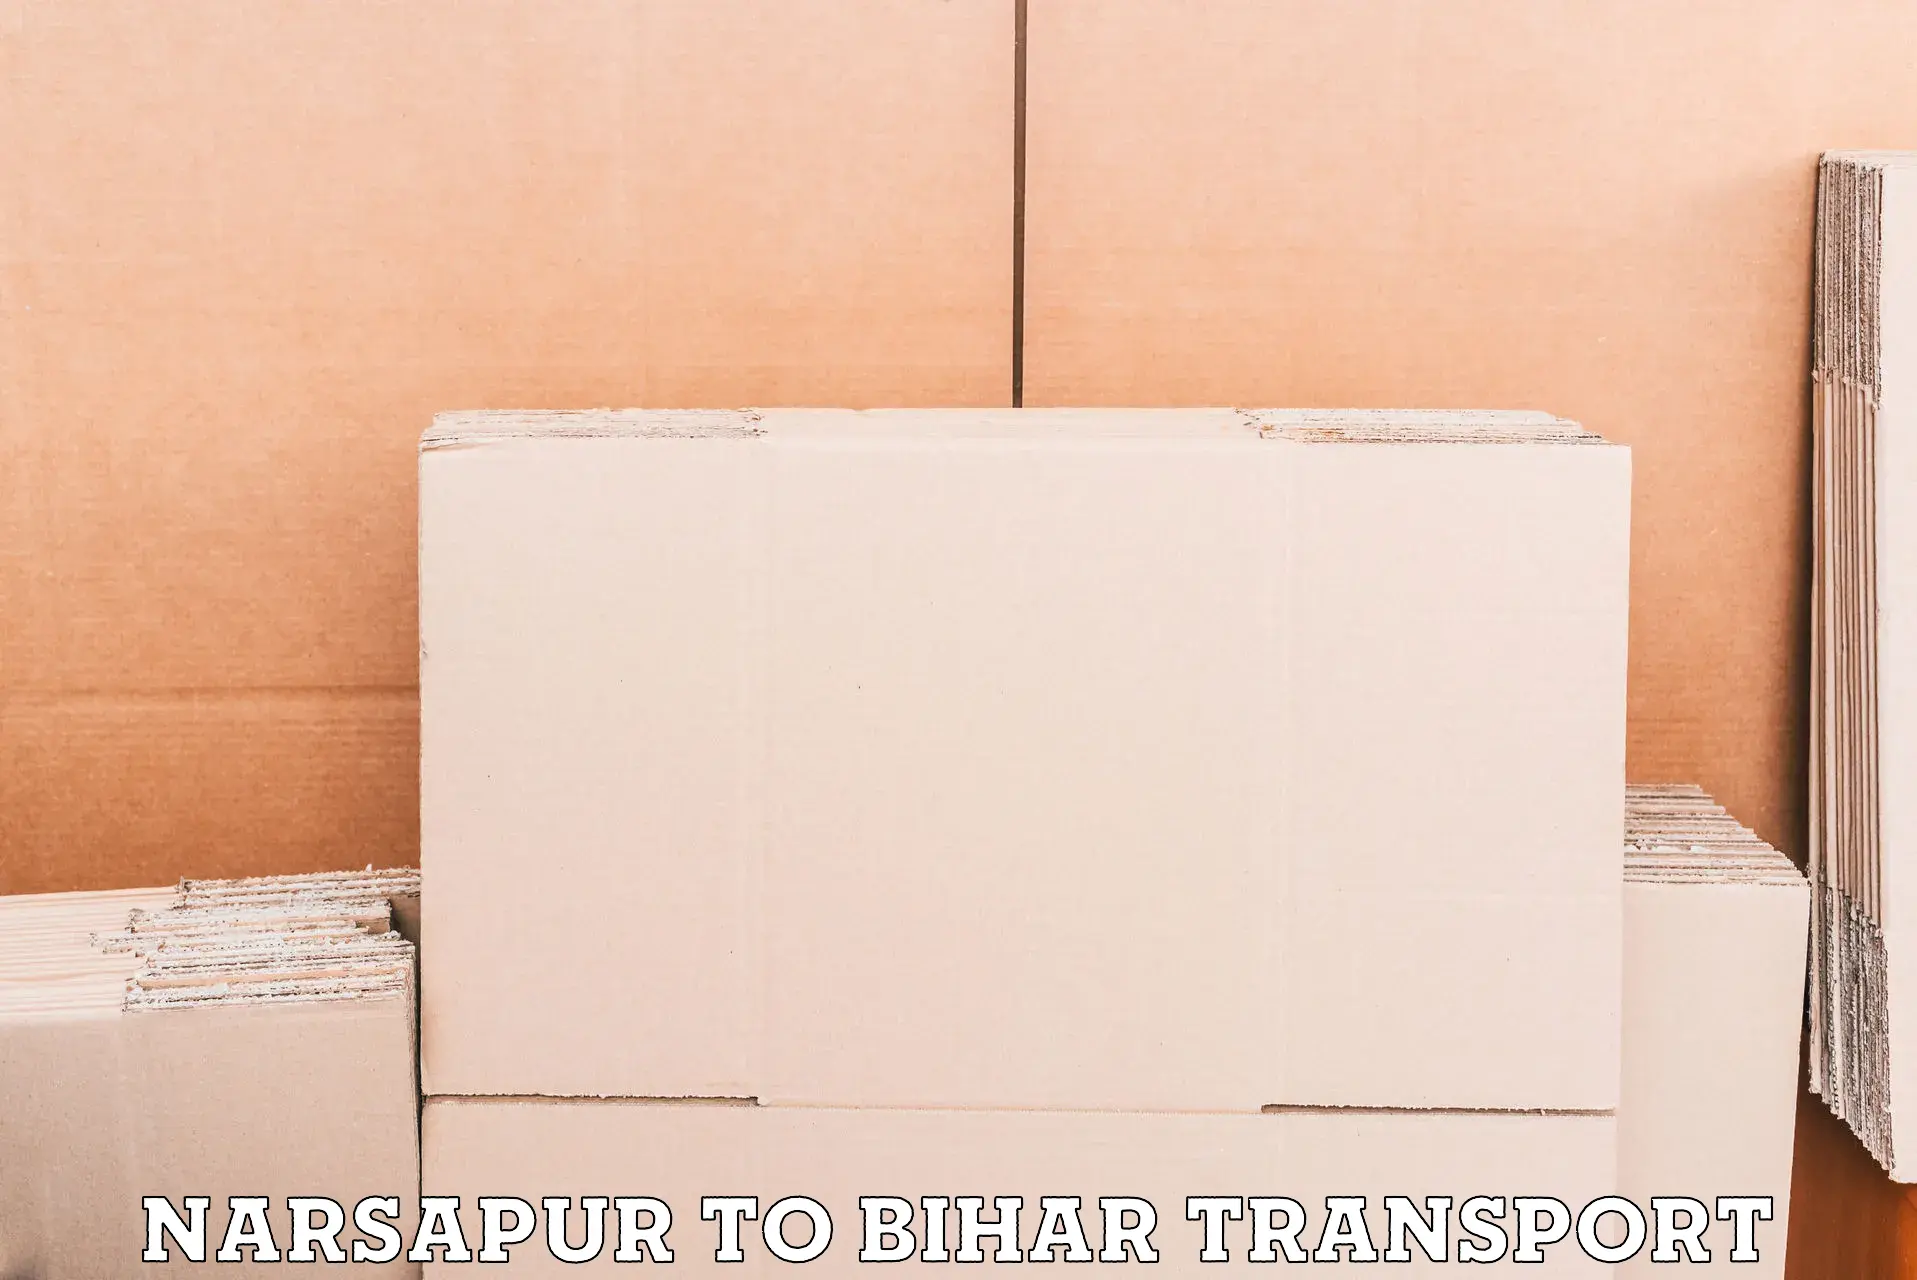 Nearby transport service Narsapur to Muzaffarpur